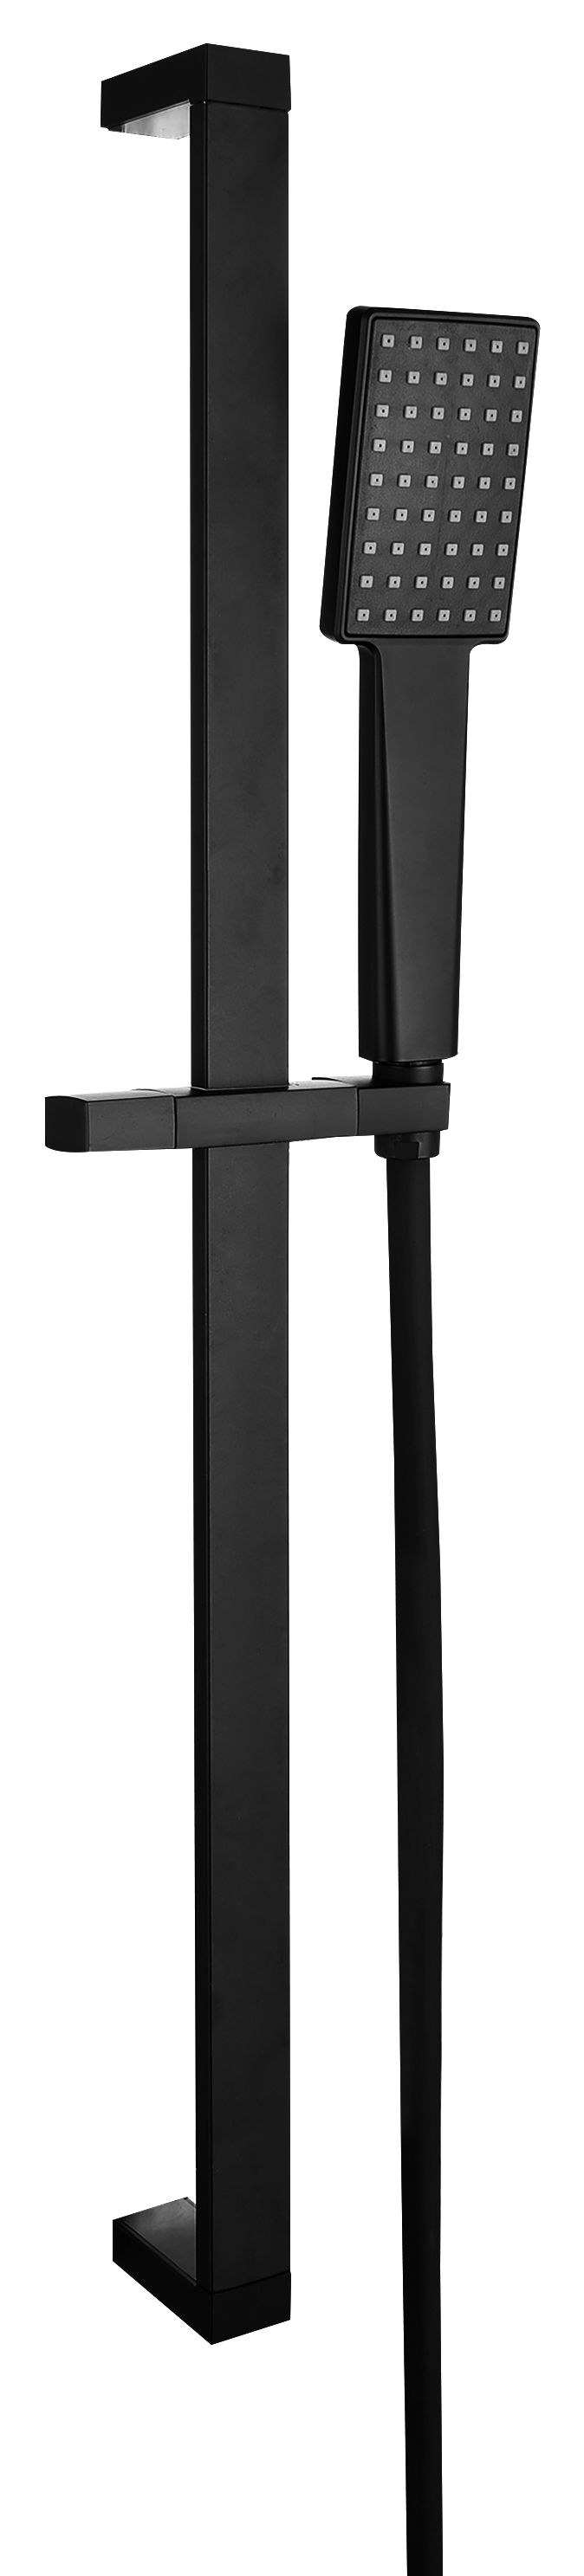 Image of Bristan Square Shower Kit with Single Function Handset - Black